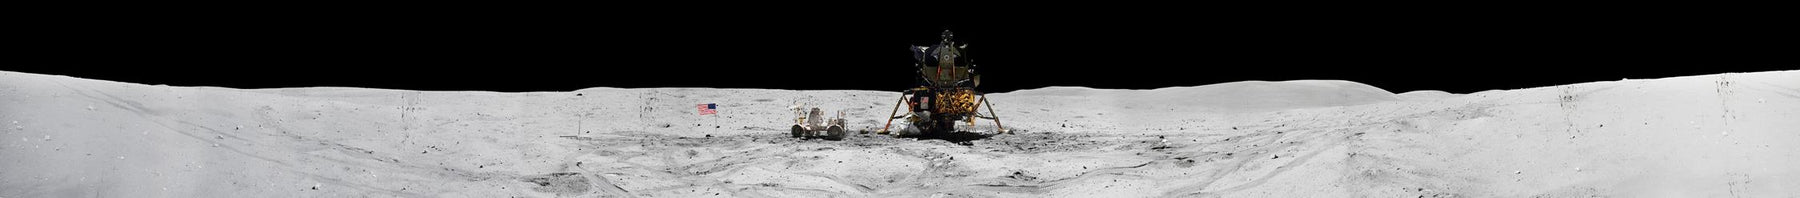 Apollo 16 moon panorama